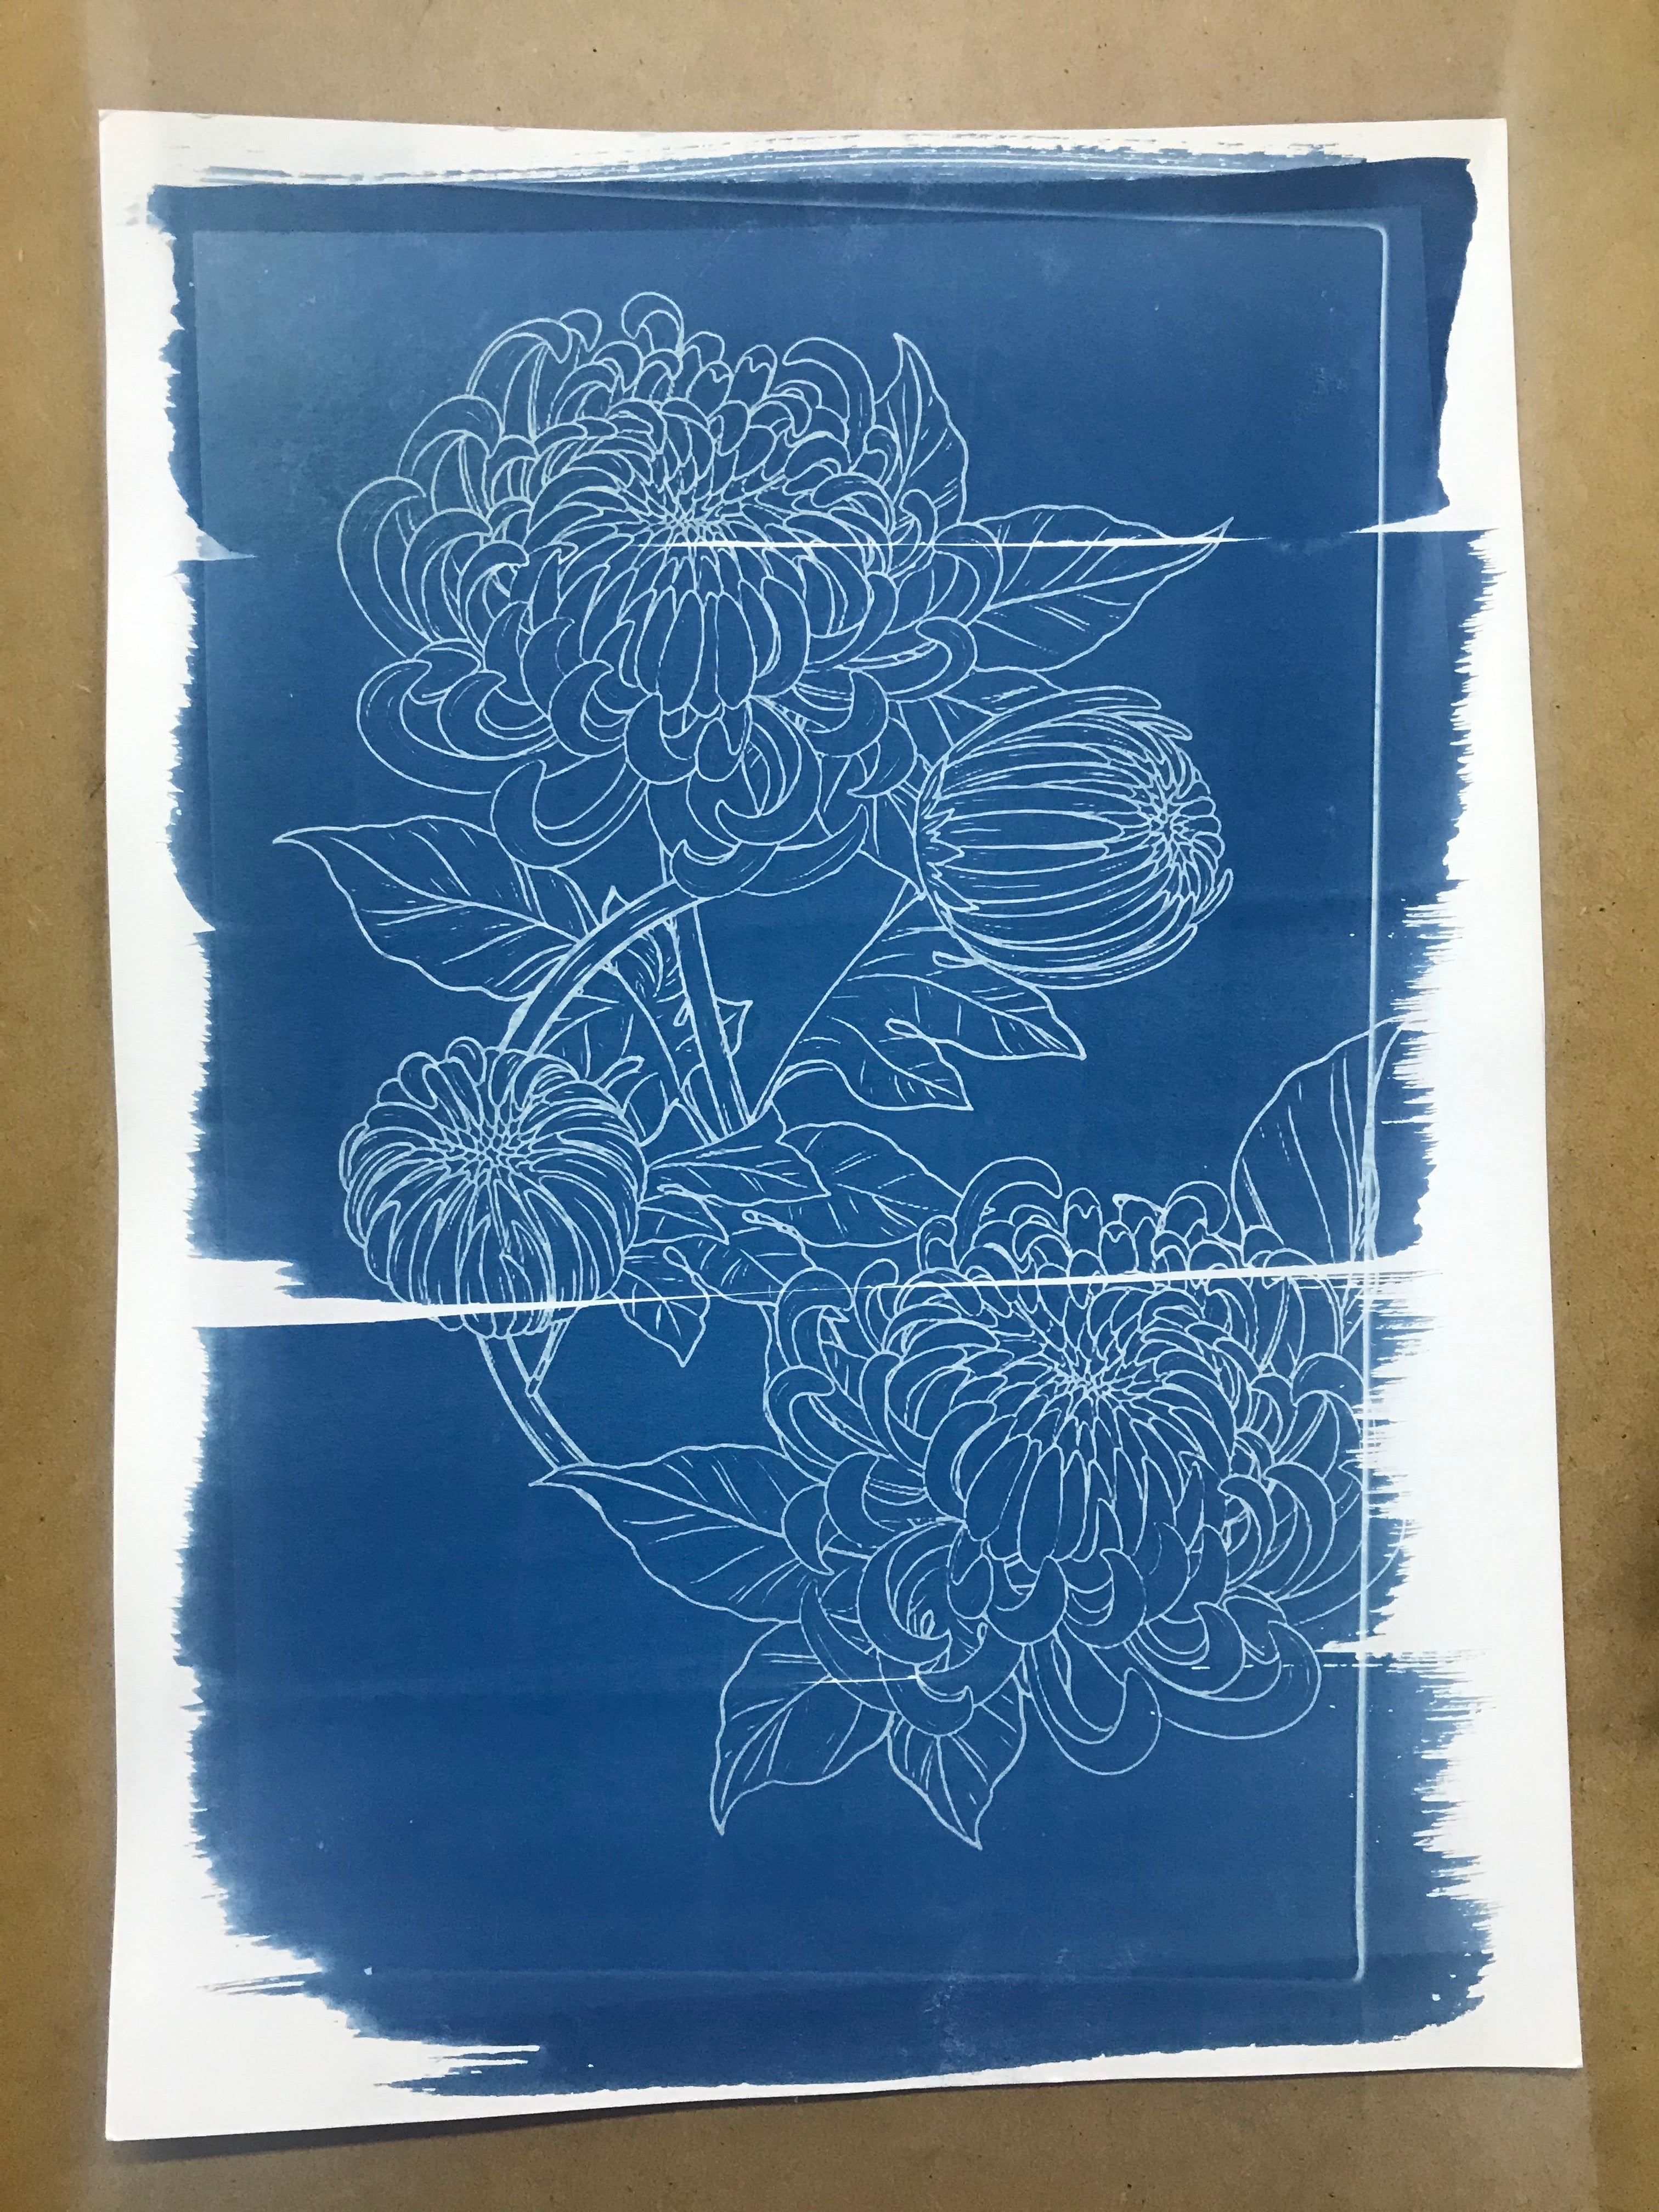 藍曬名信片 / Cyanotype Printed Post card "Workshop"